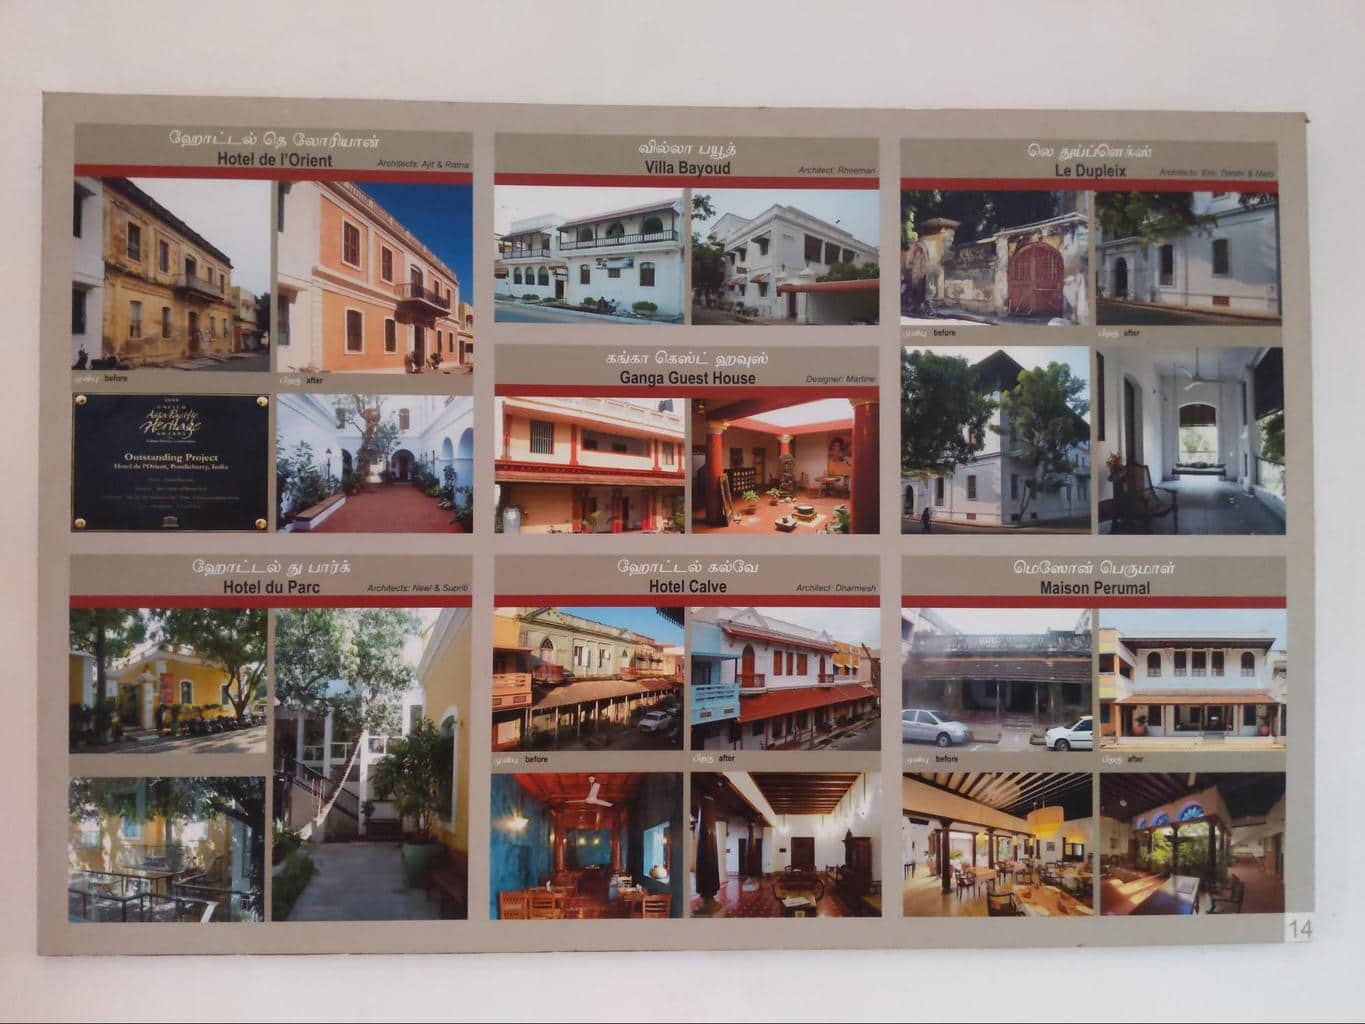 Documenting Pondicherry’s heritage at INTACH